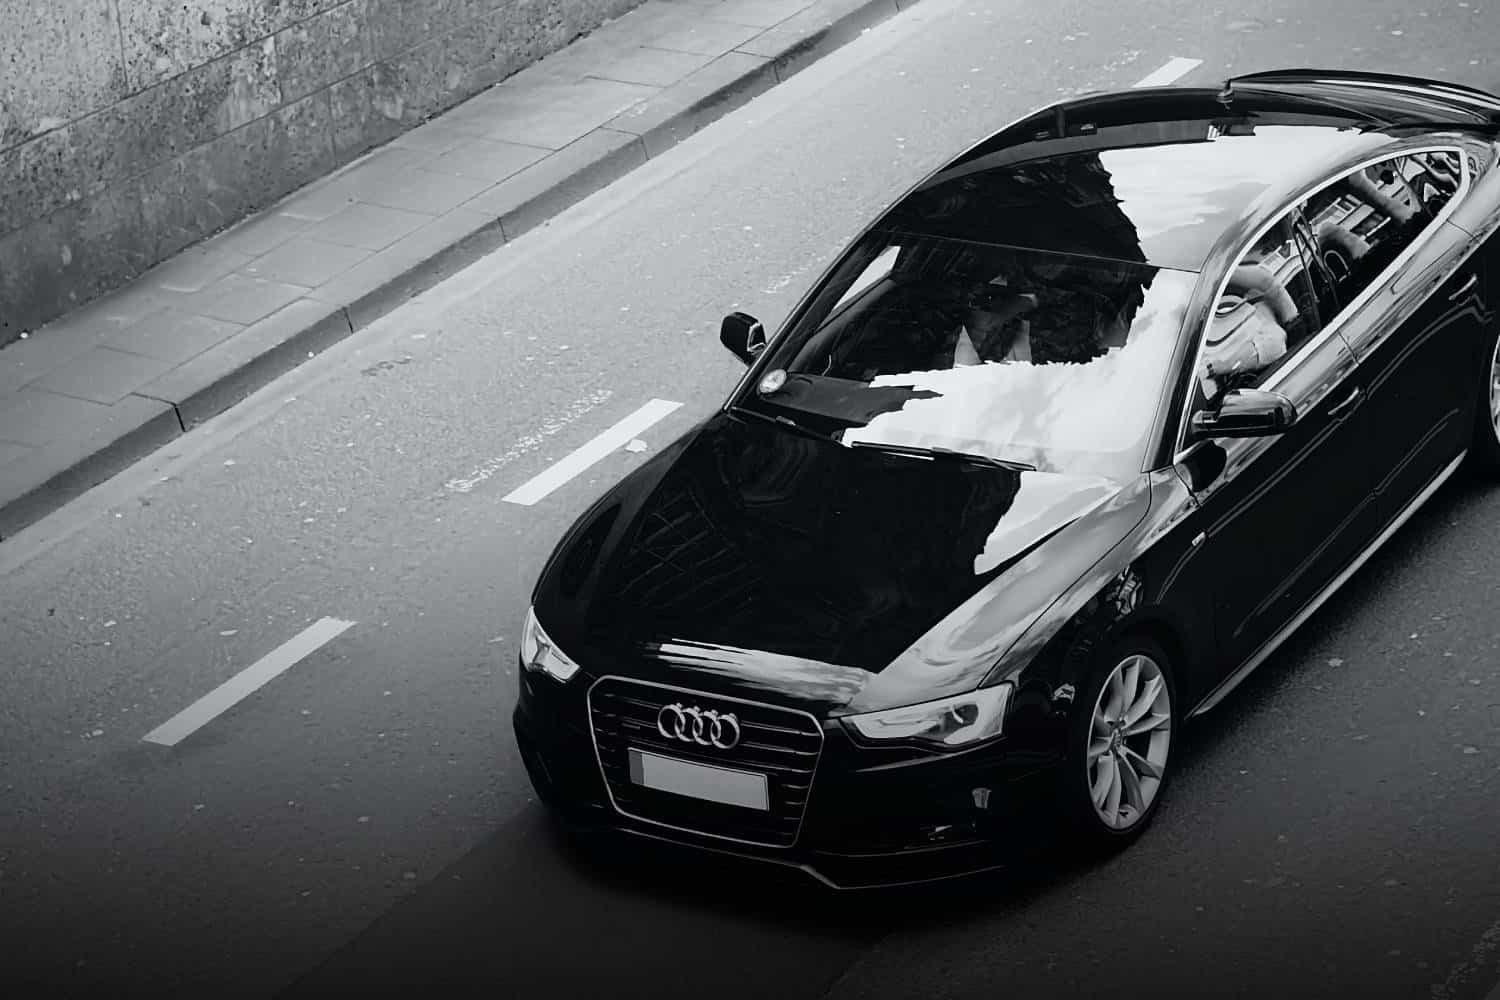 Audi a8 dream cars top picks valentines day